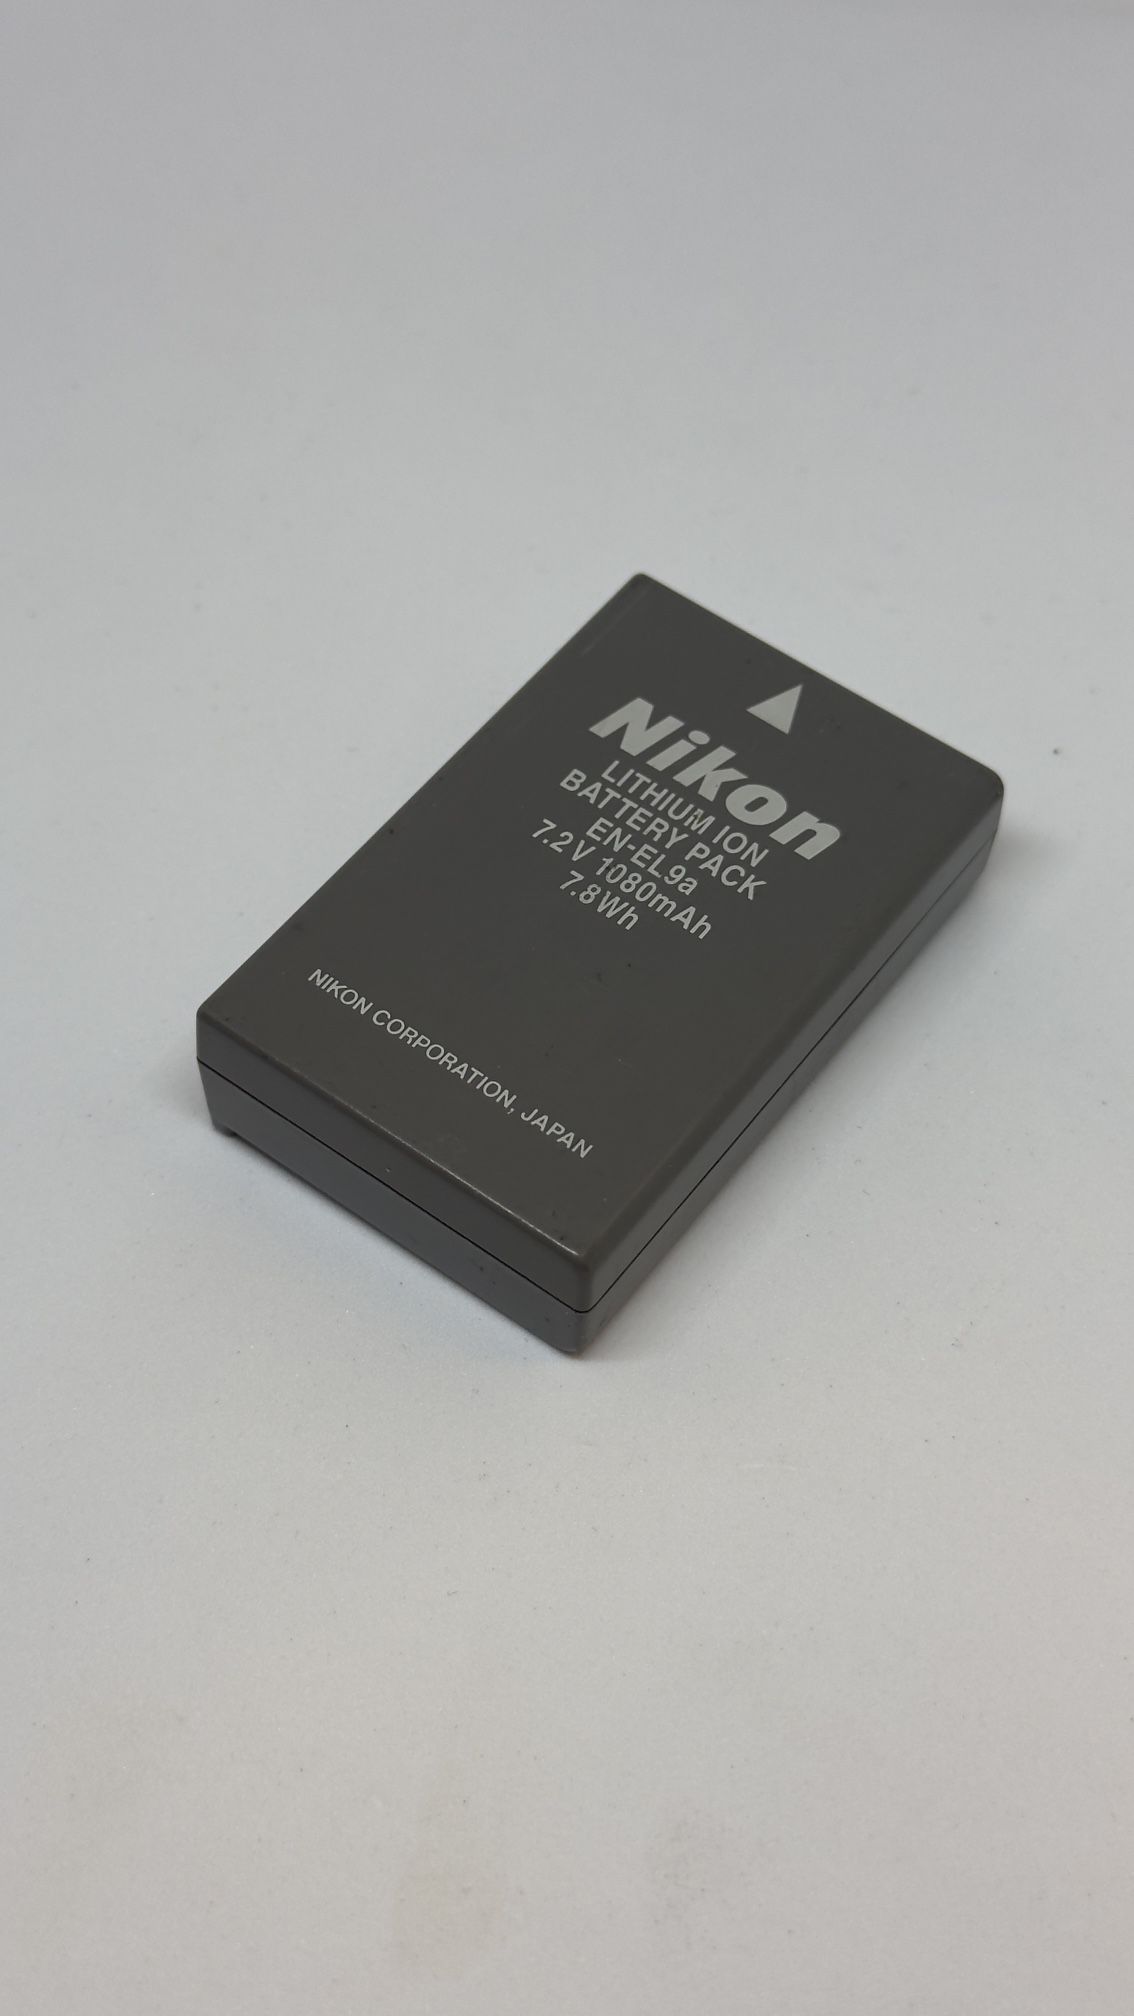 Nikon OEM EN-EL9a Lithium-Ion Battery for d40 60 3000